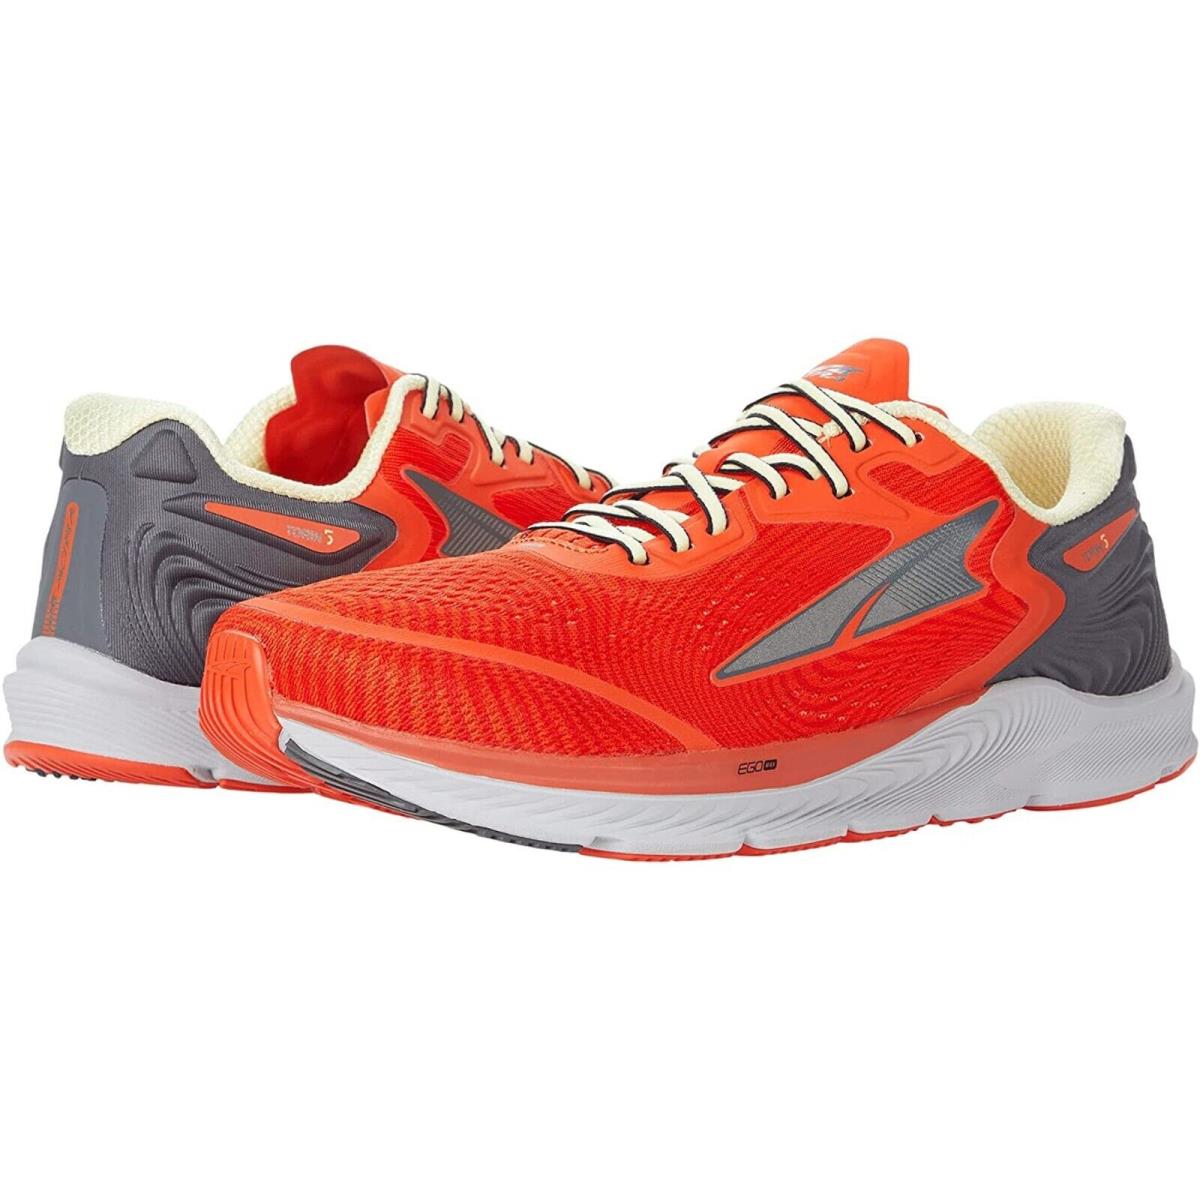 Altra N7129 Mens Orange Torin 5 Running Shoe Sneaker Size US 15 EU 50